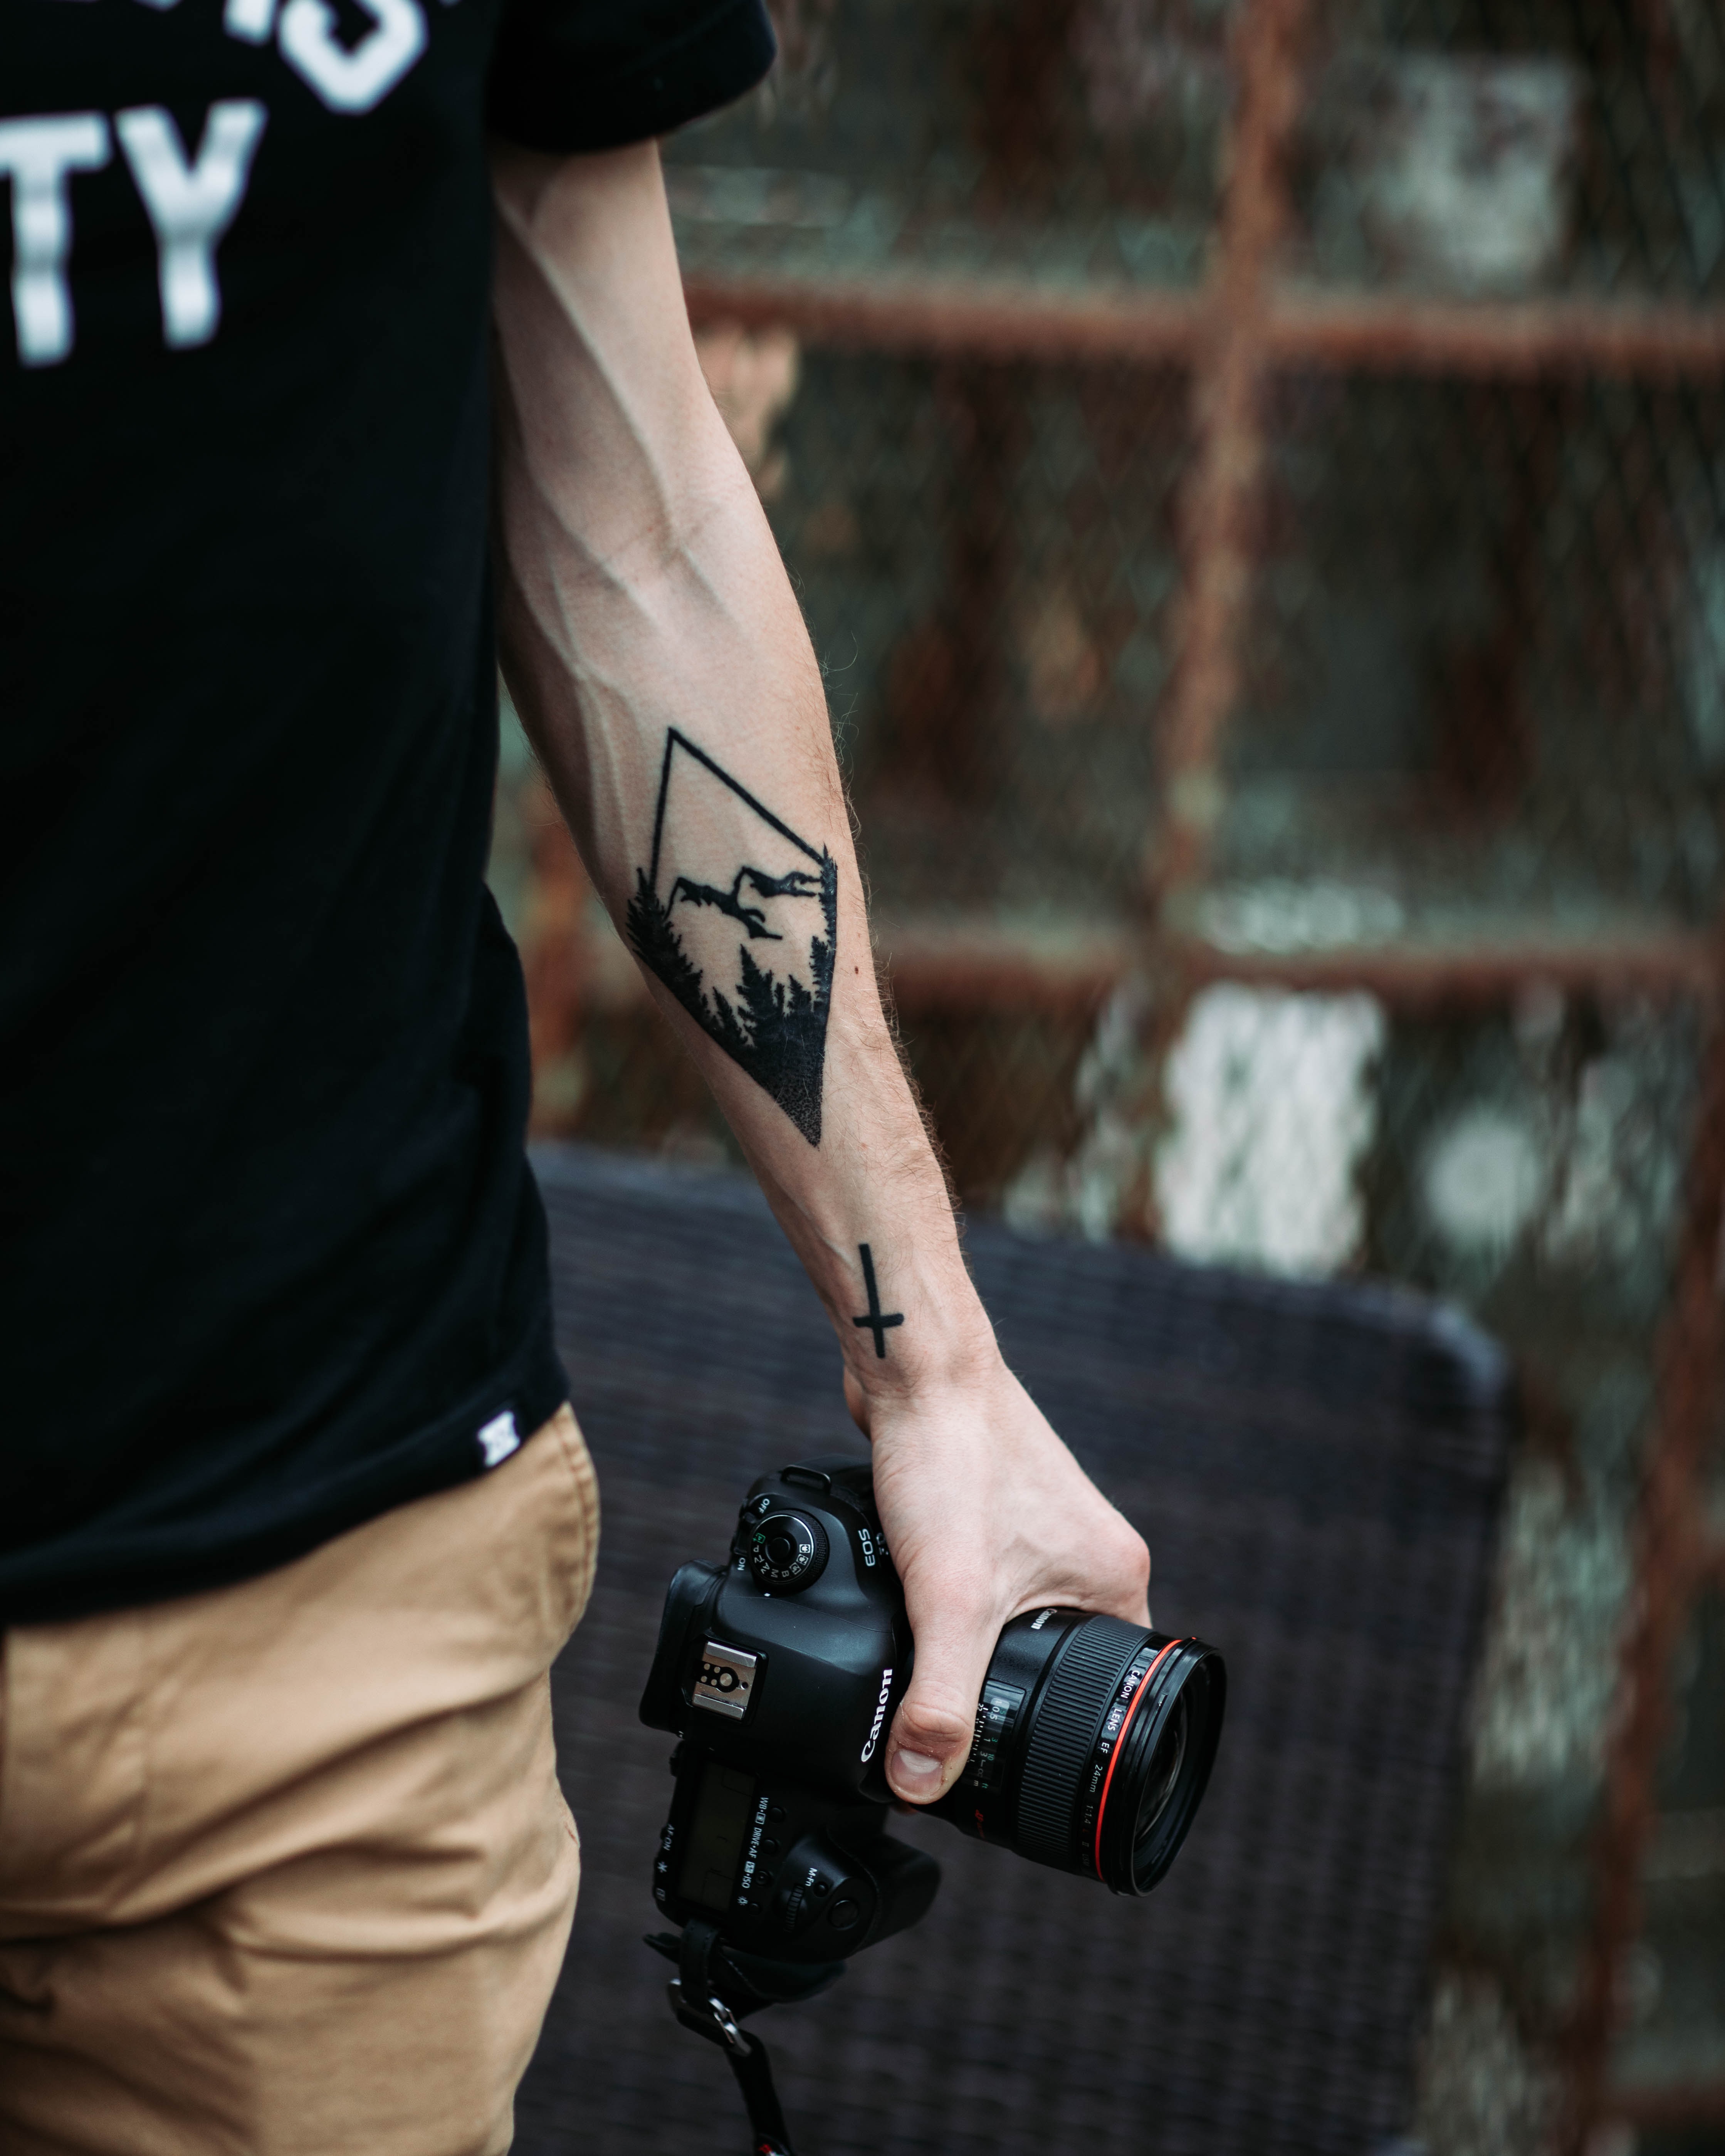 tattoo, photographer, tattoos, hand, technology, technologies, camera